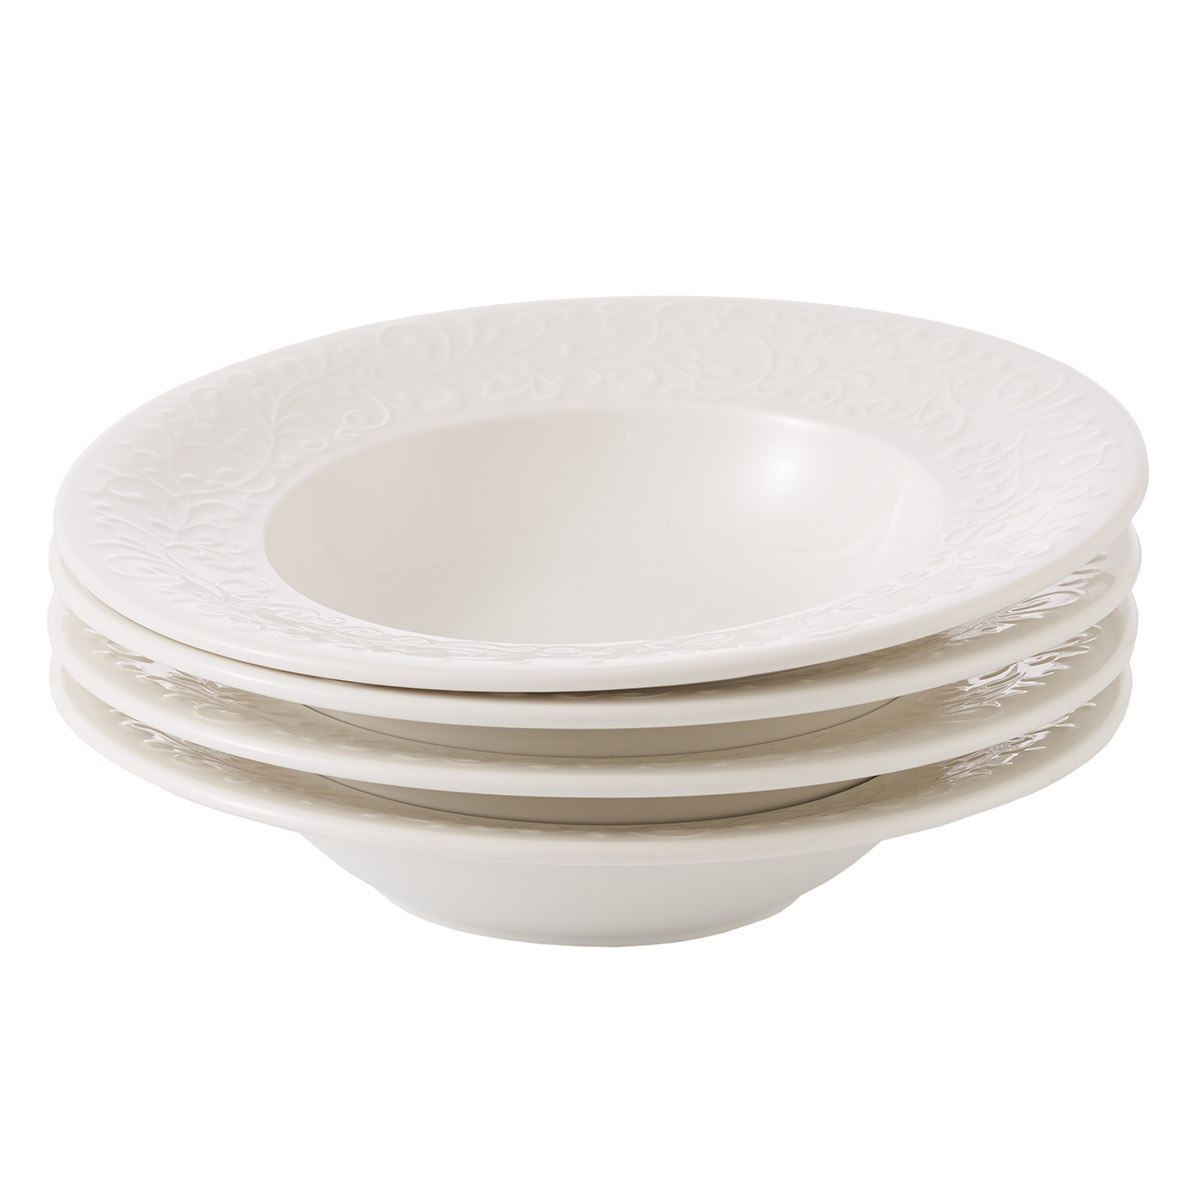 Набор тарелок суповых Gipfel Silvia 42922 25 см 4 предмета набор тарелок обеденных gipfel silvia 42923 25 см 4 предмета